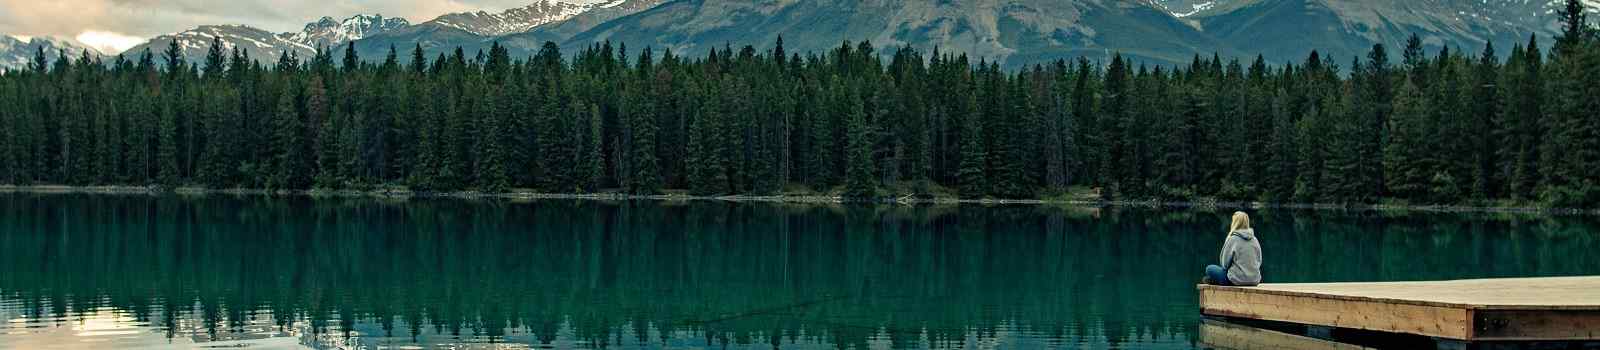 CA-SPIRIT-BEAR-LODGE Enjoying the beautiful landscape by Annette Lake in Jasper National Park  Canadashutterstock 530657062